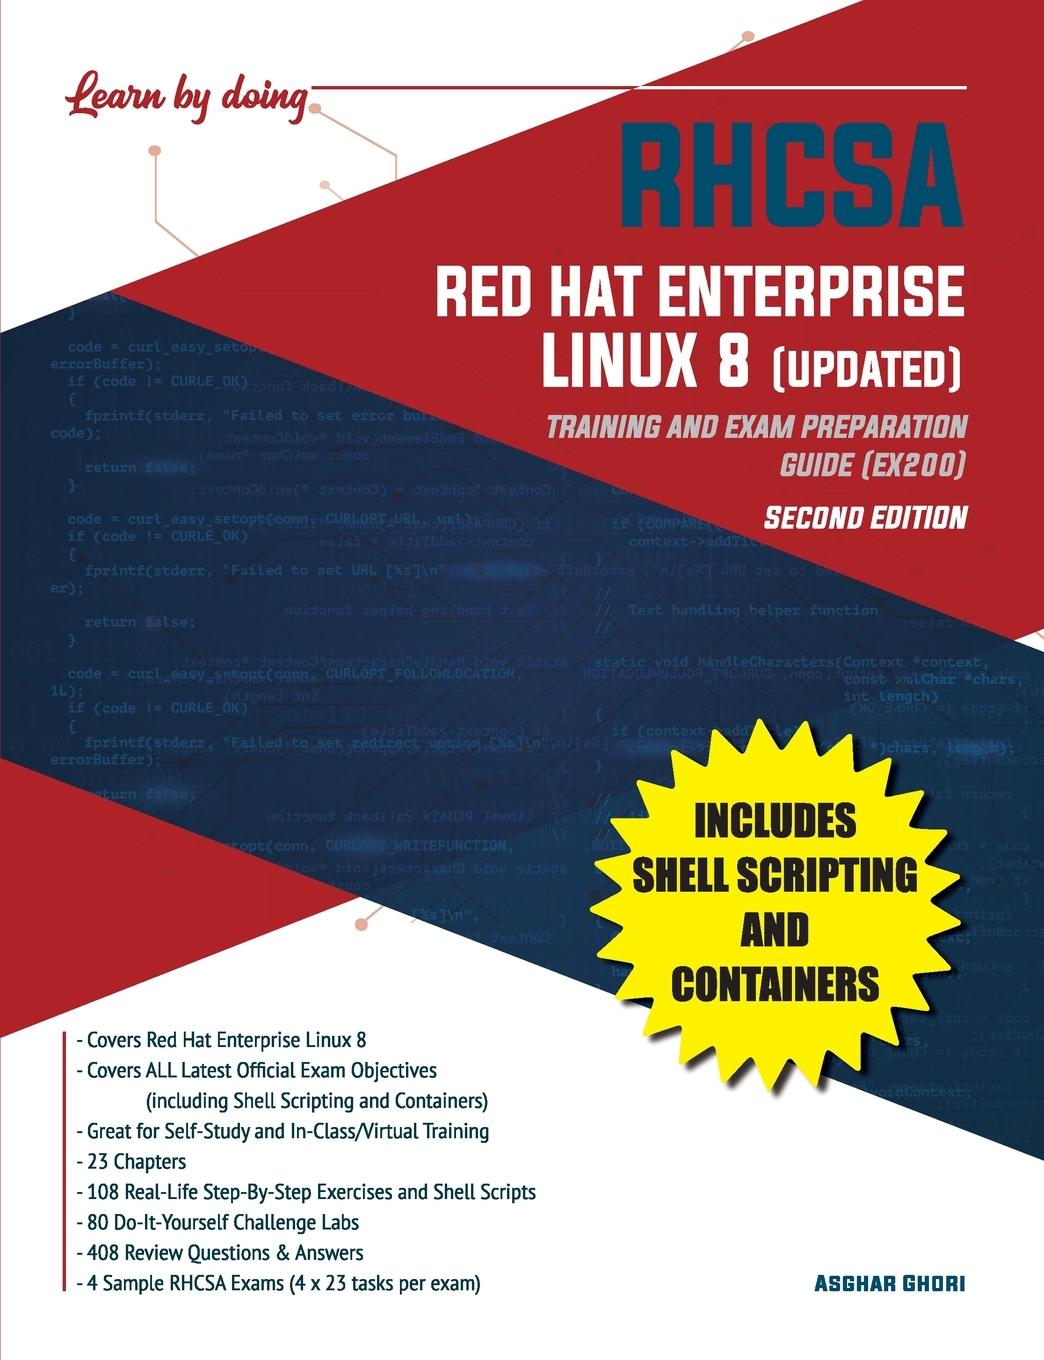 Книга RHCSA Red Hat Enterprise Linux 8 (UPDATED) 